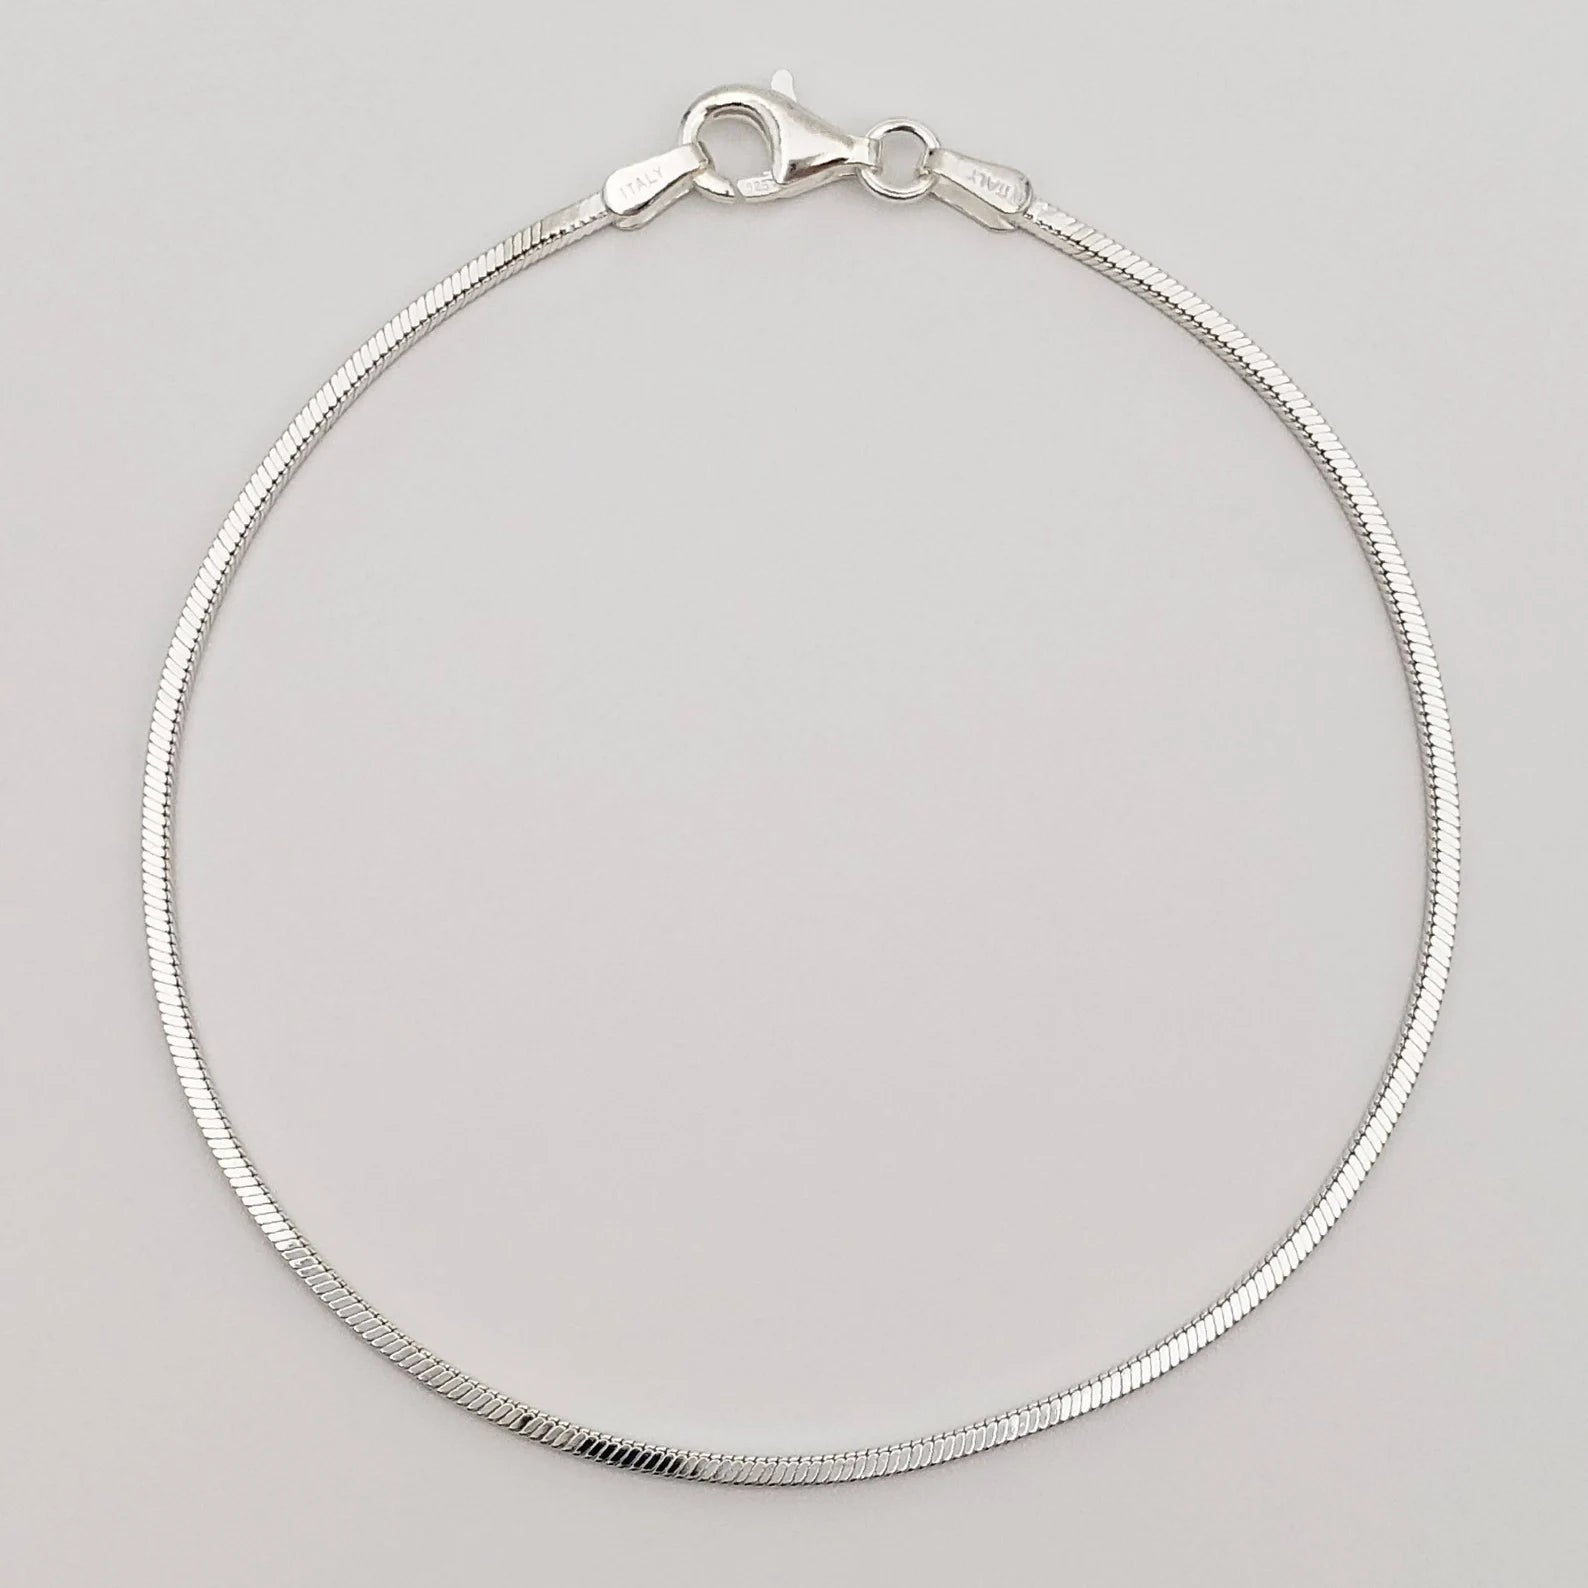 Square Snake Silver Bracelet For Women - The Silver Essence